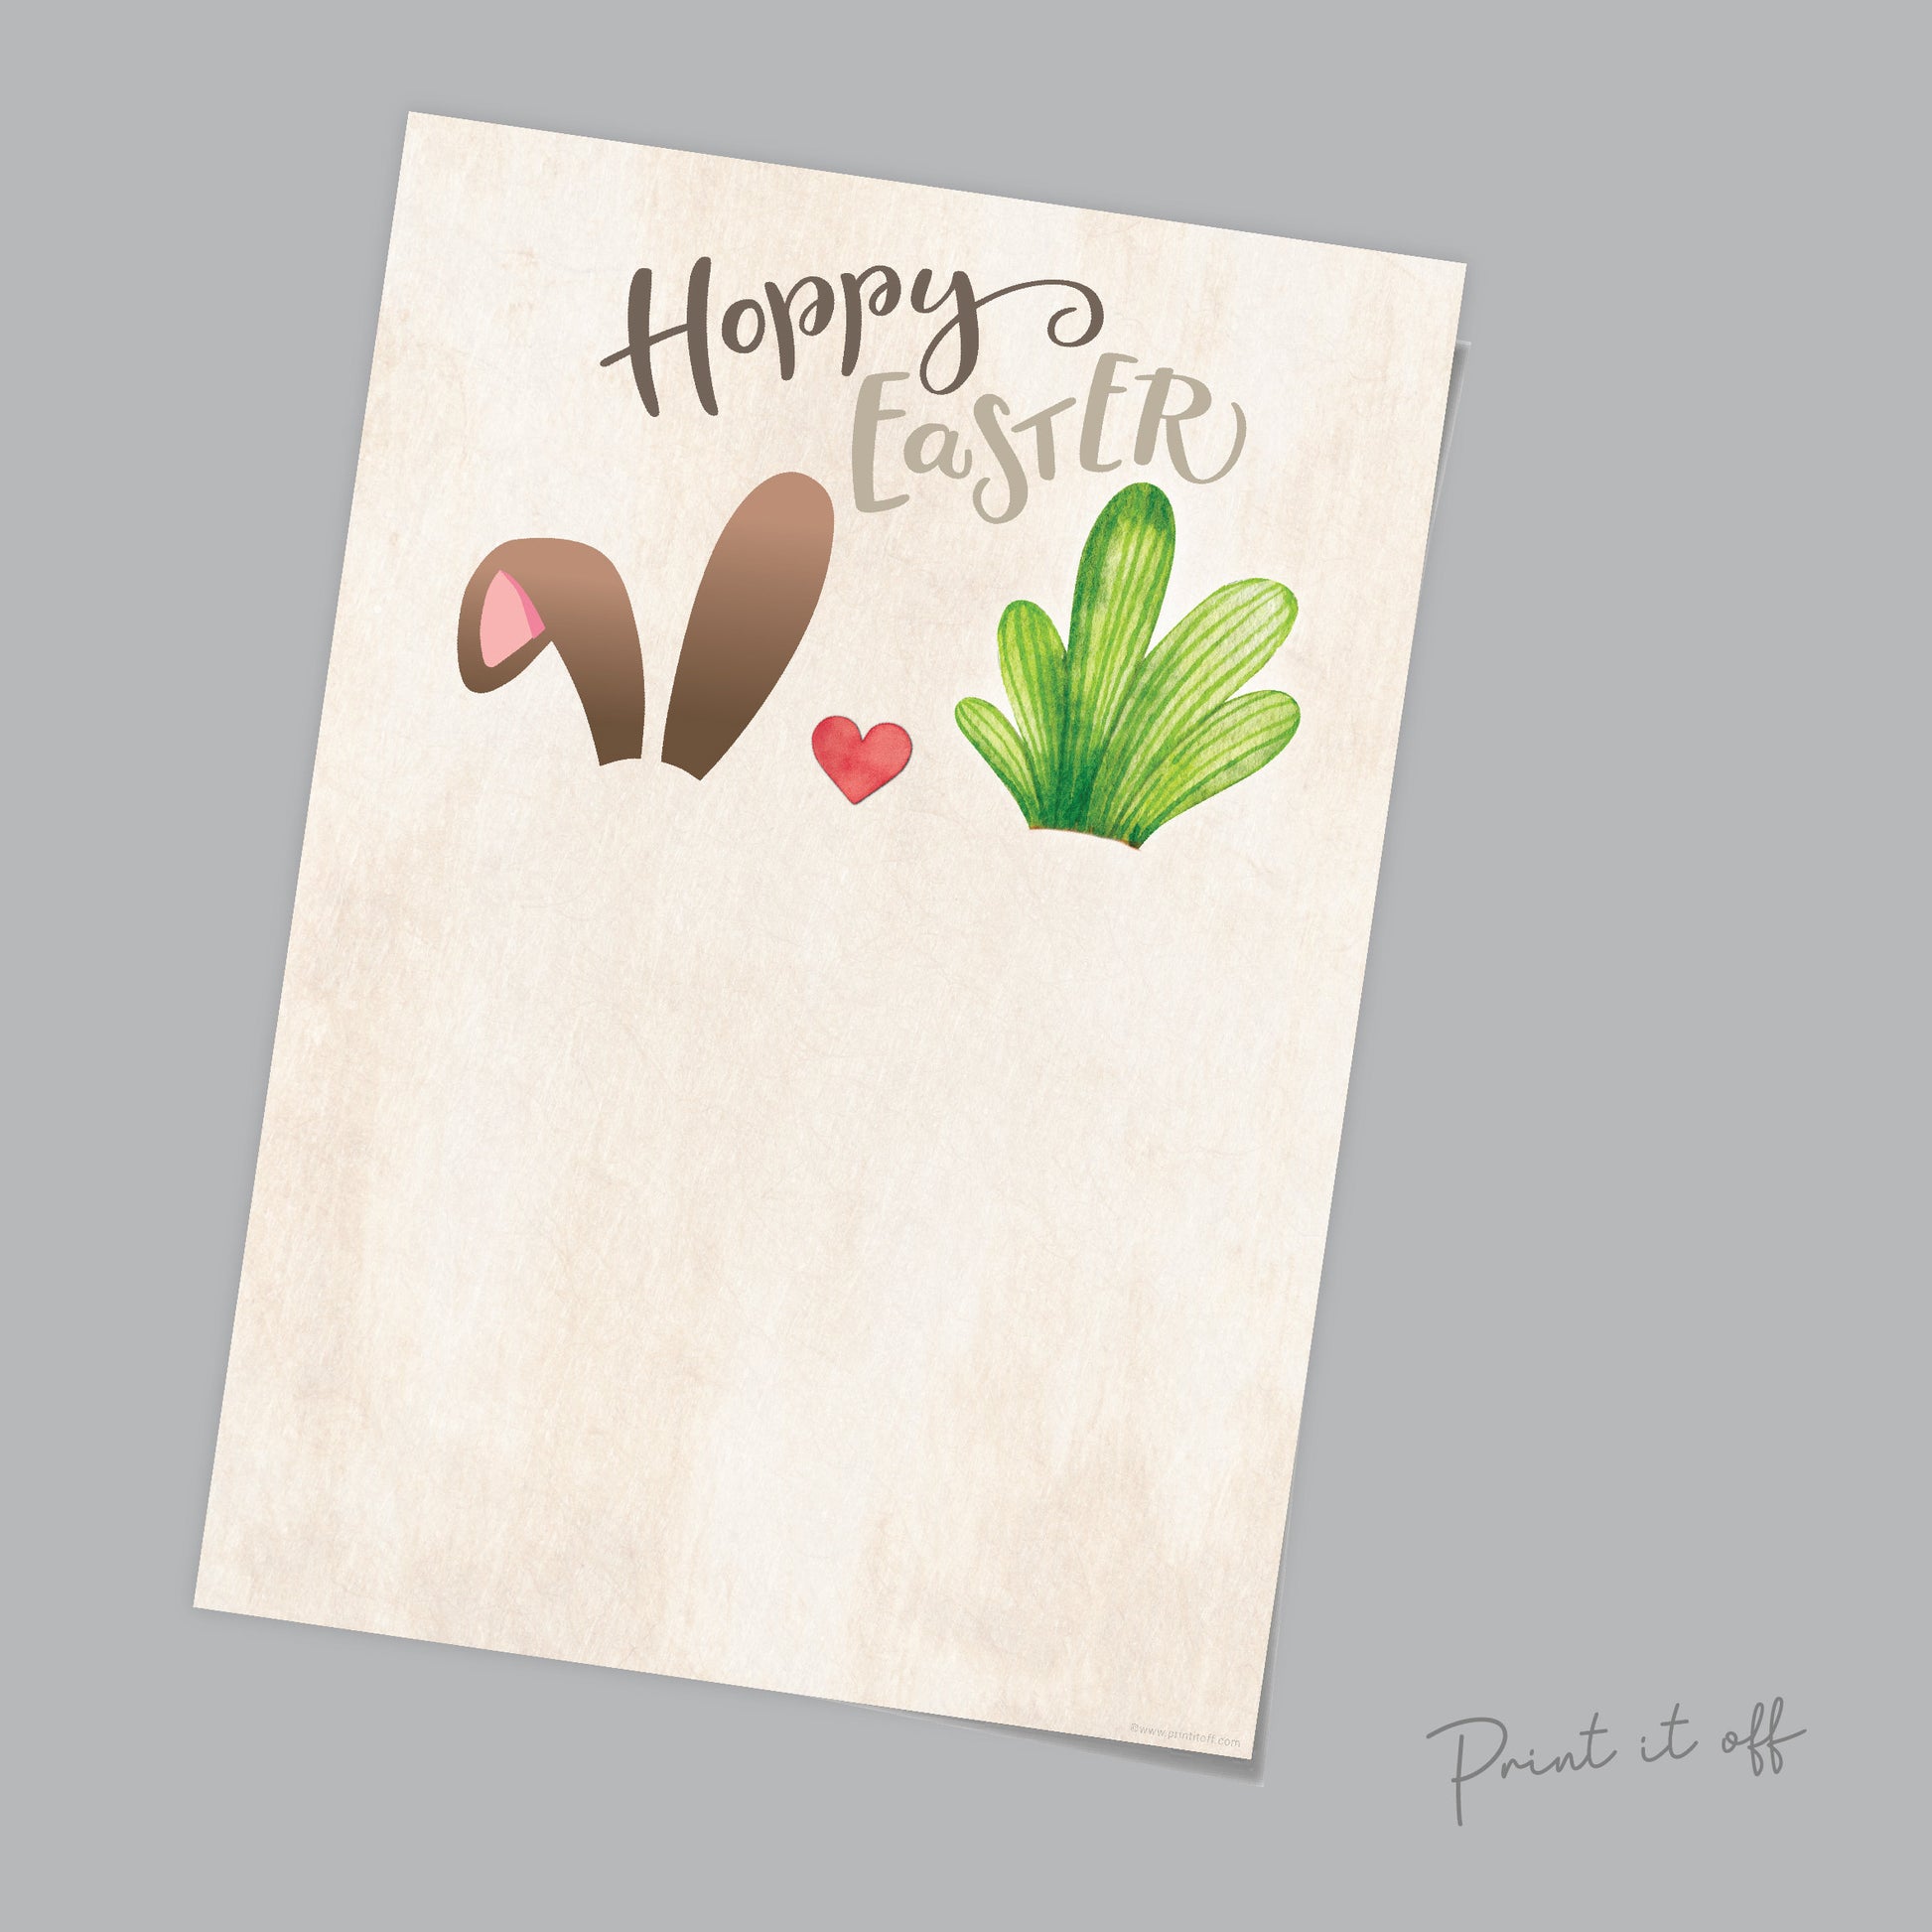 Hoppy Happy Easter/ Bunny Carrot / Footprint Handprint Art Craft / Foot Feet / Kids Baby Toddler / Activity Gift Card / PRINT IT OFF 0431